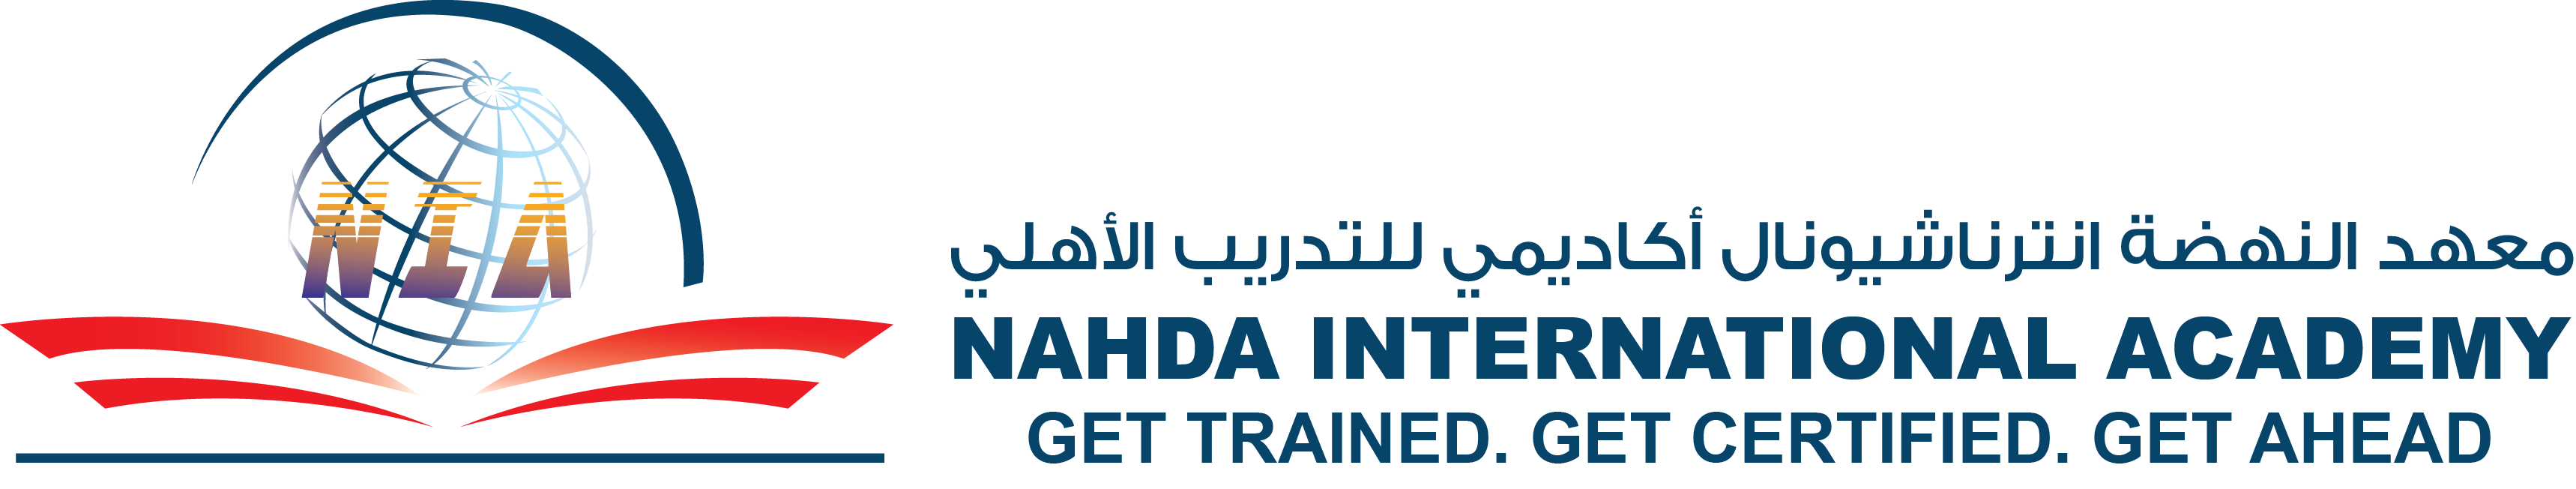 Nahda International Academy Kuwait